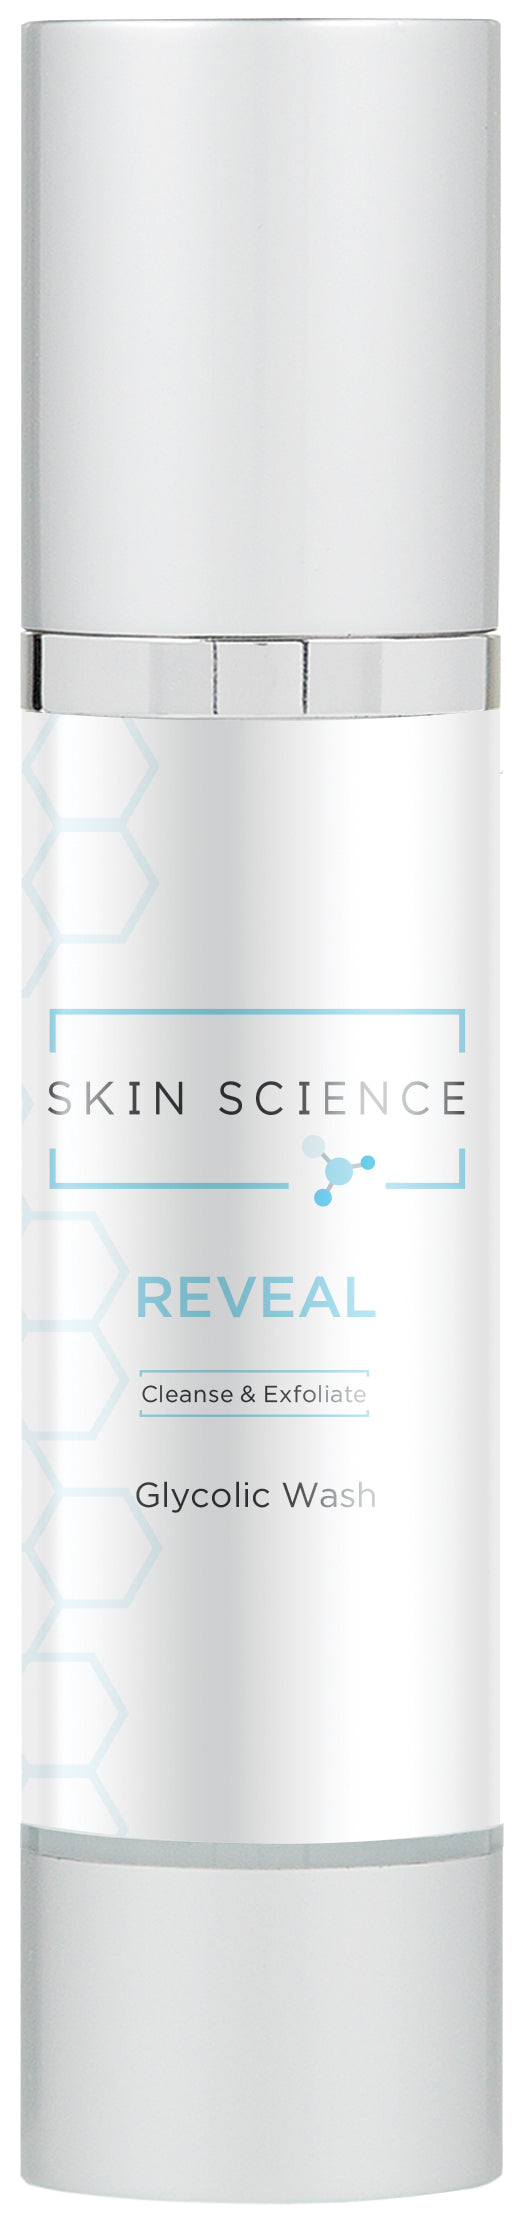 Reveal Glycolic wash - Skin Science UK